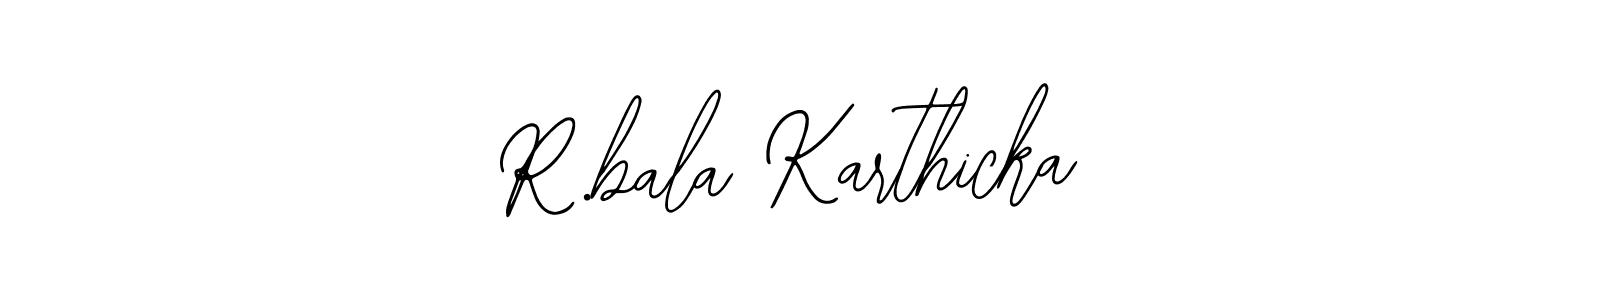 How to make R.bala Karthicka signature? Bearetta-2O07w is a professional autograph style. Create handwritten signature for R.bala Karthicka name. R.bala Karthicka signature style 12 images and pictures png